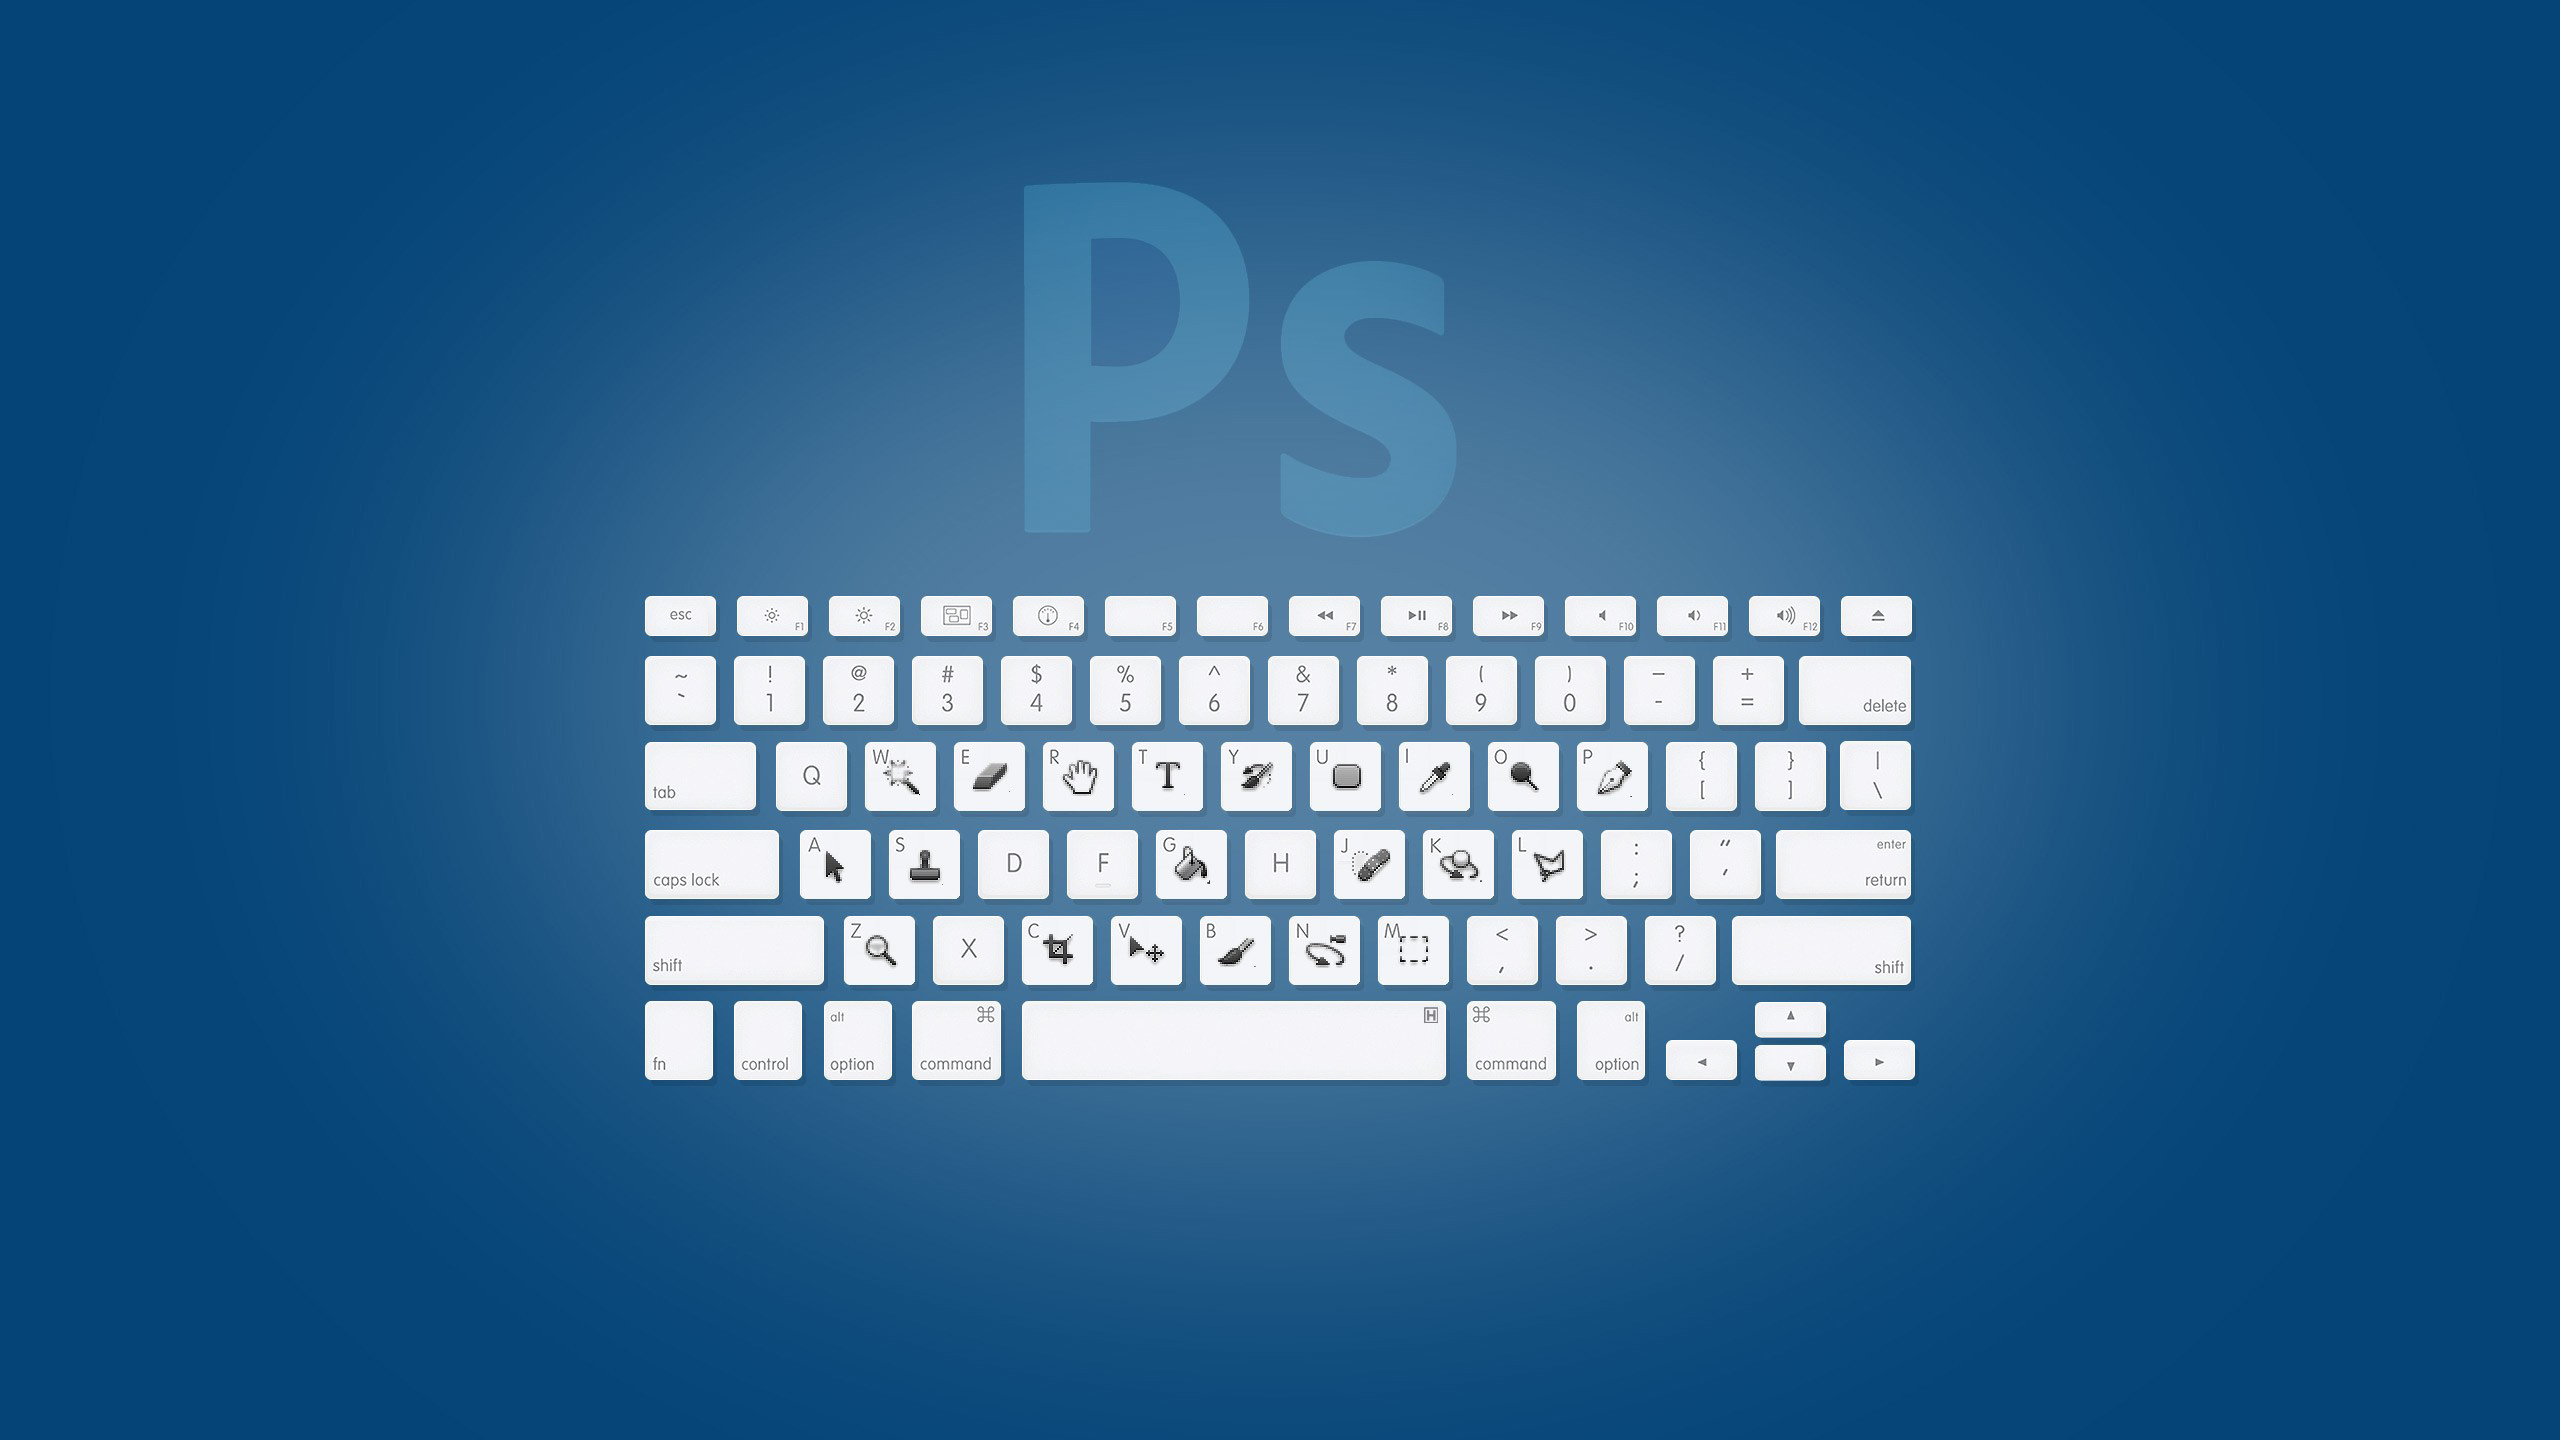 Adobe Photoshop Keyboard Shortcuts by ©Trevor Morris